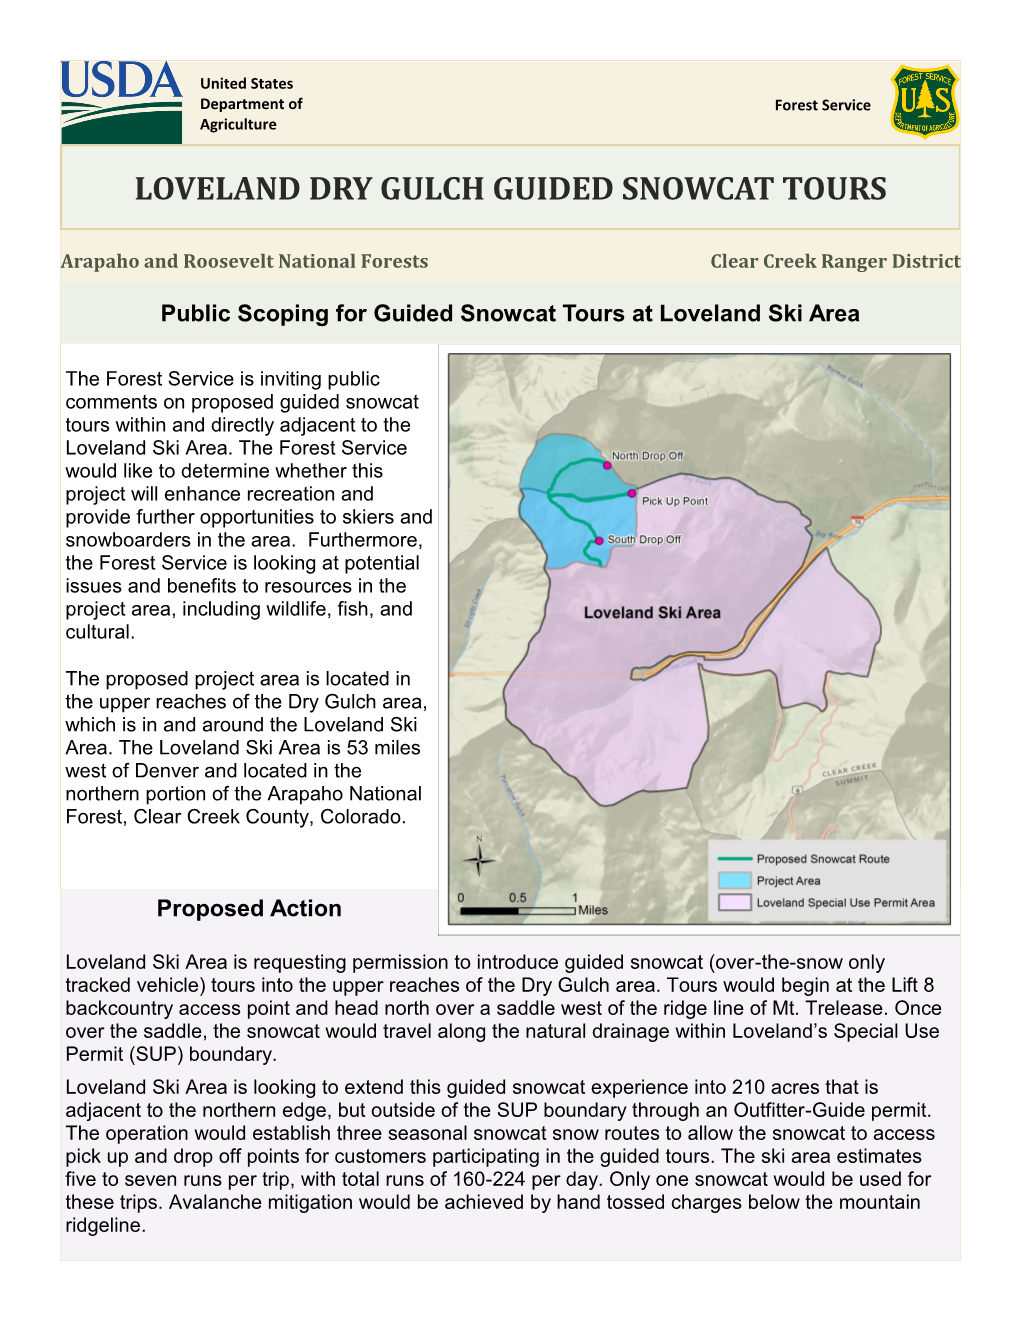 Loveland Dry Gulch Guided Snowcat Tours